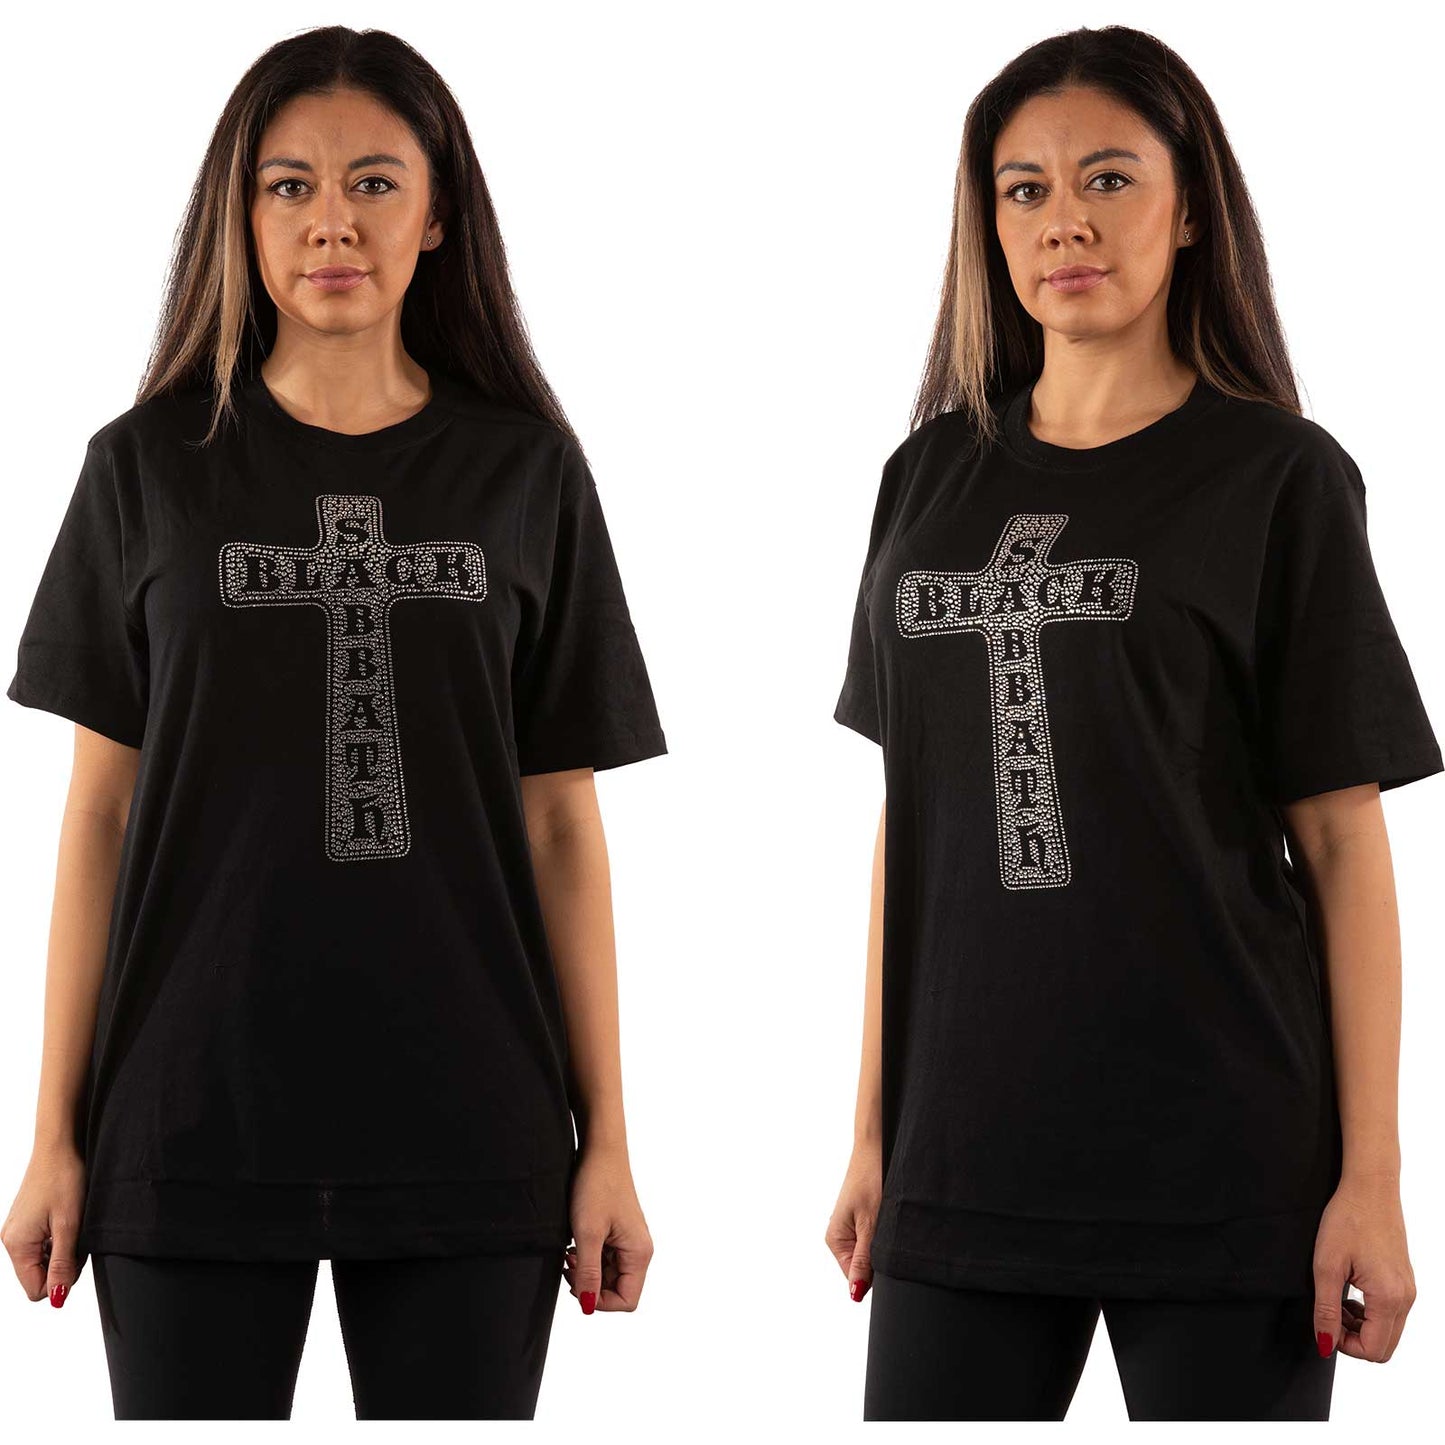 Black Sabbath Unisex T-Shirt: Cross (Diamante)